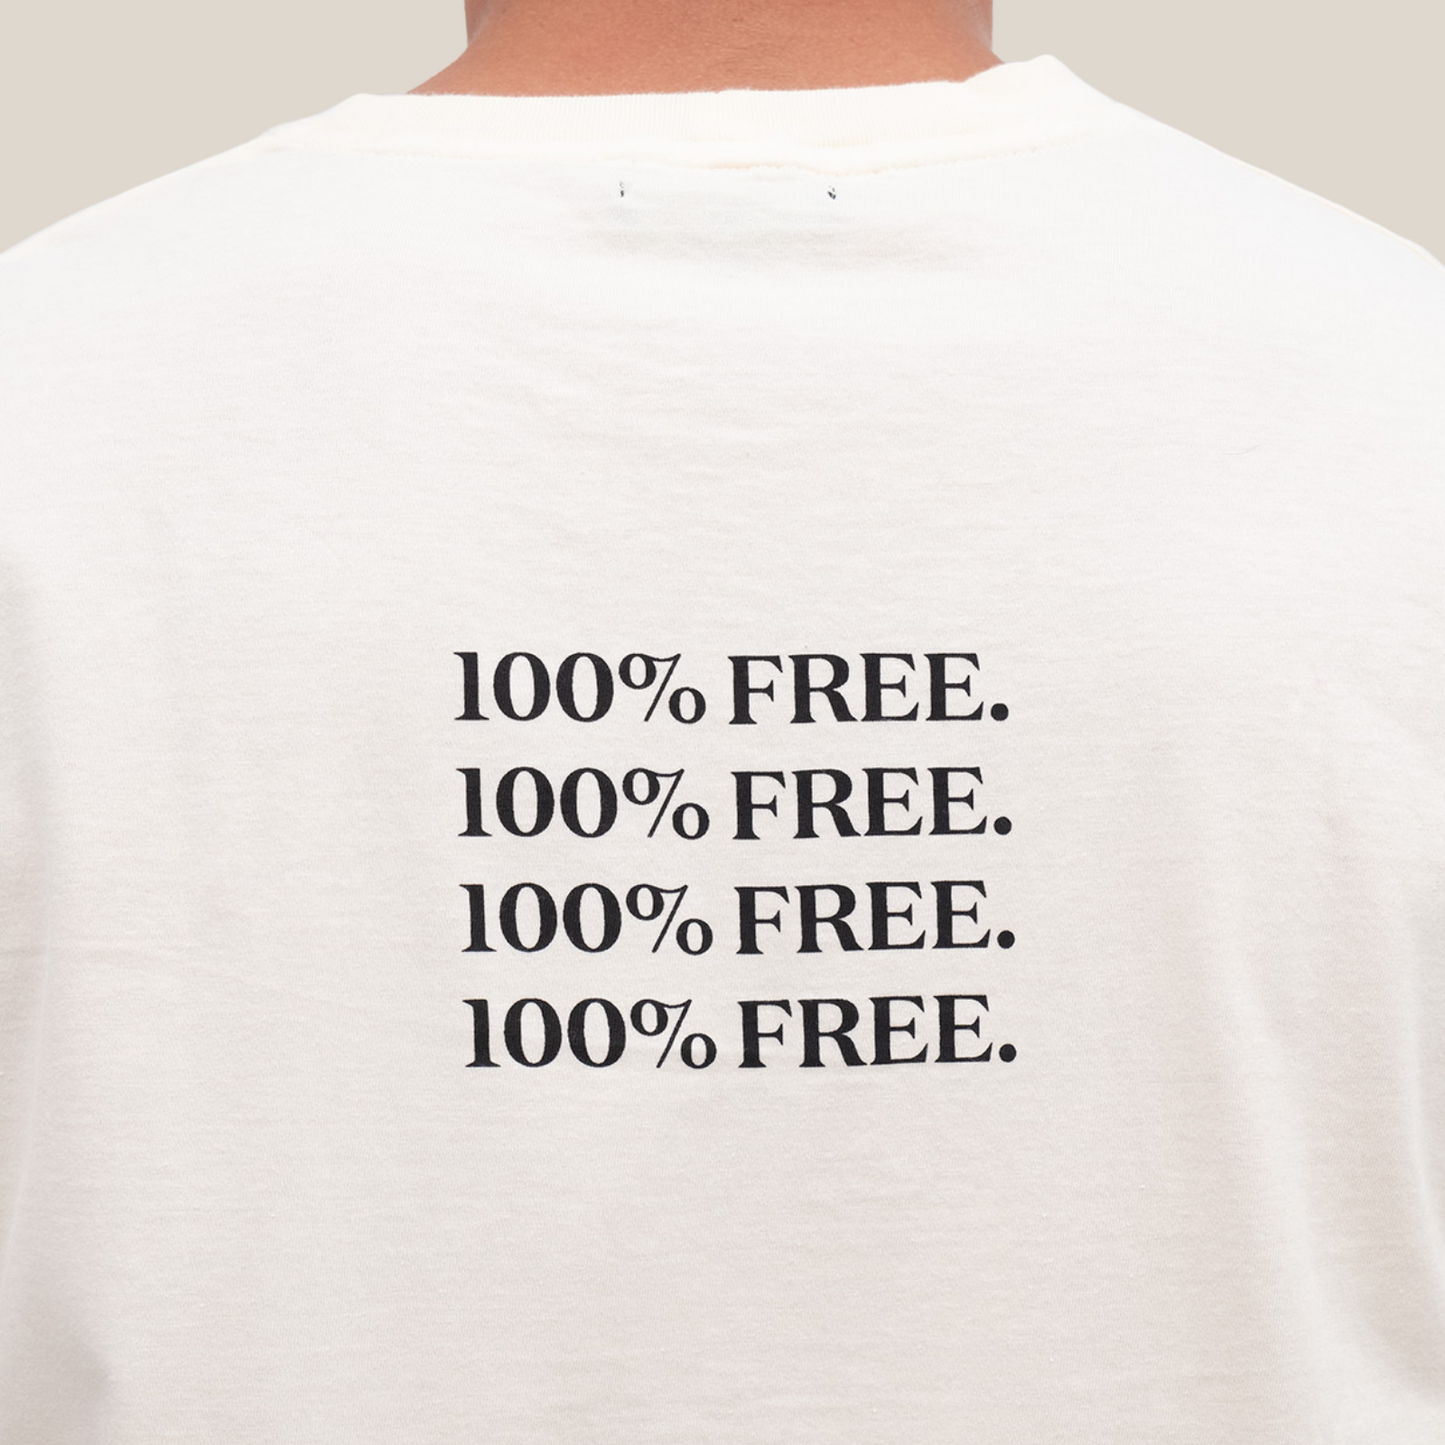 100% FREE REGULAR T-SHIRT